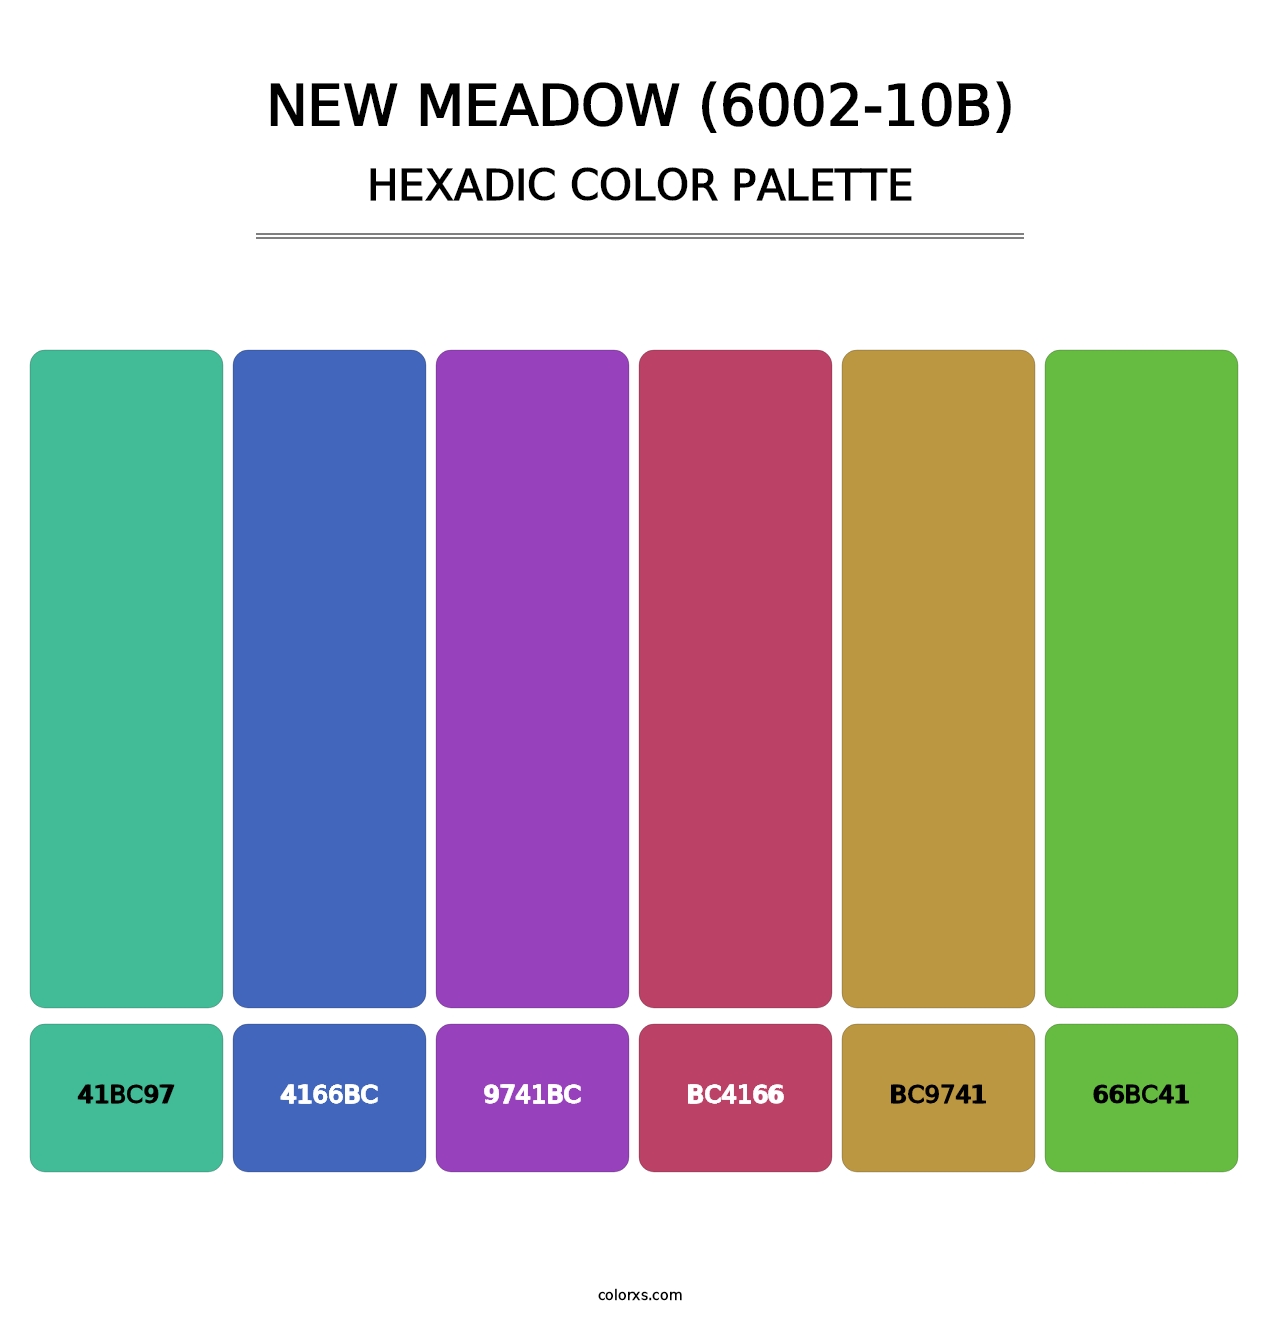 New Meadow (6002-10B) - Hexadic Color Palette